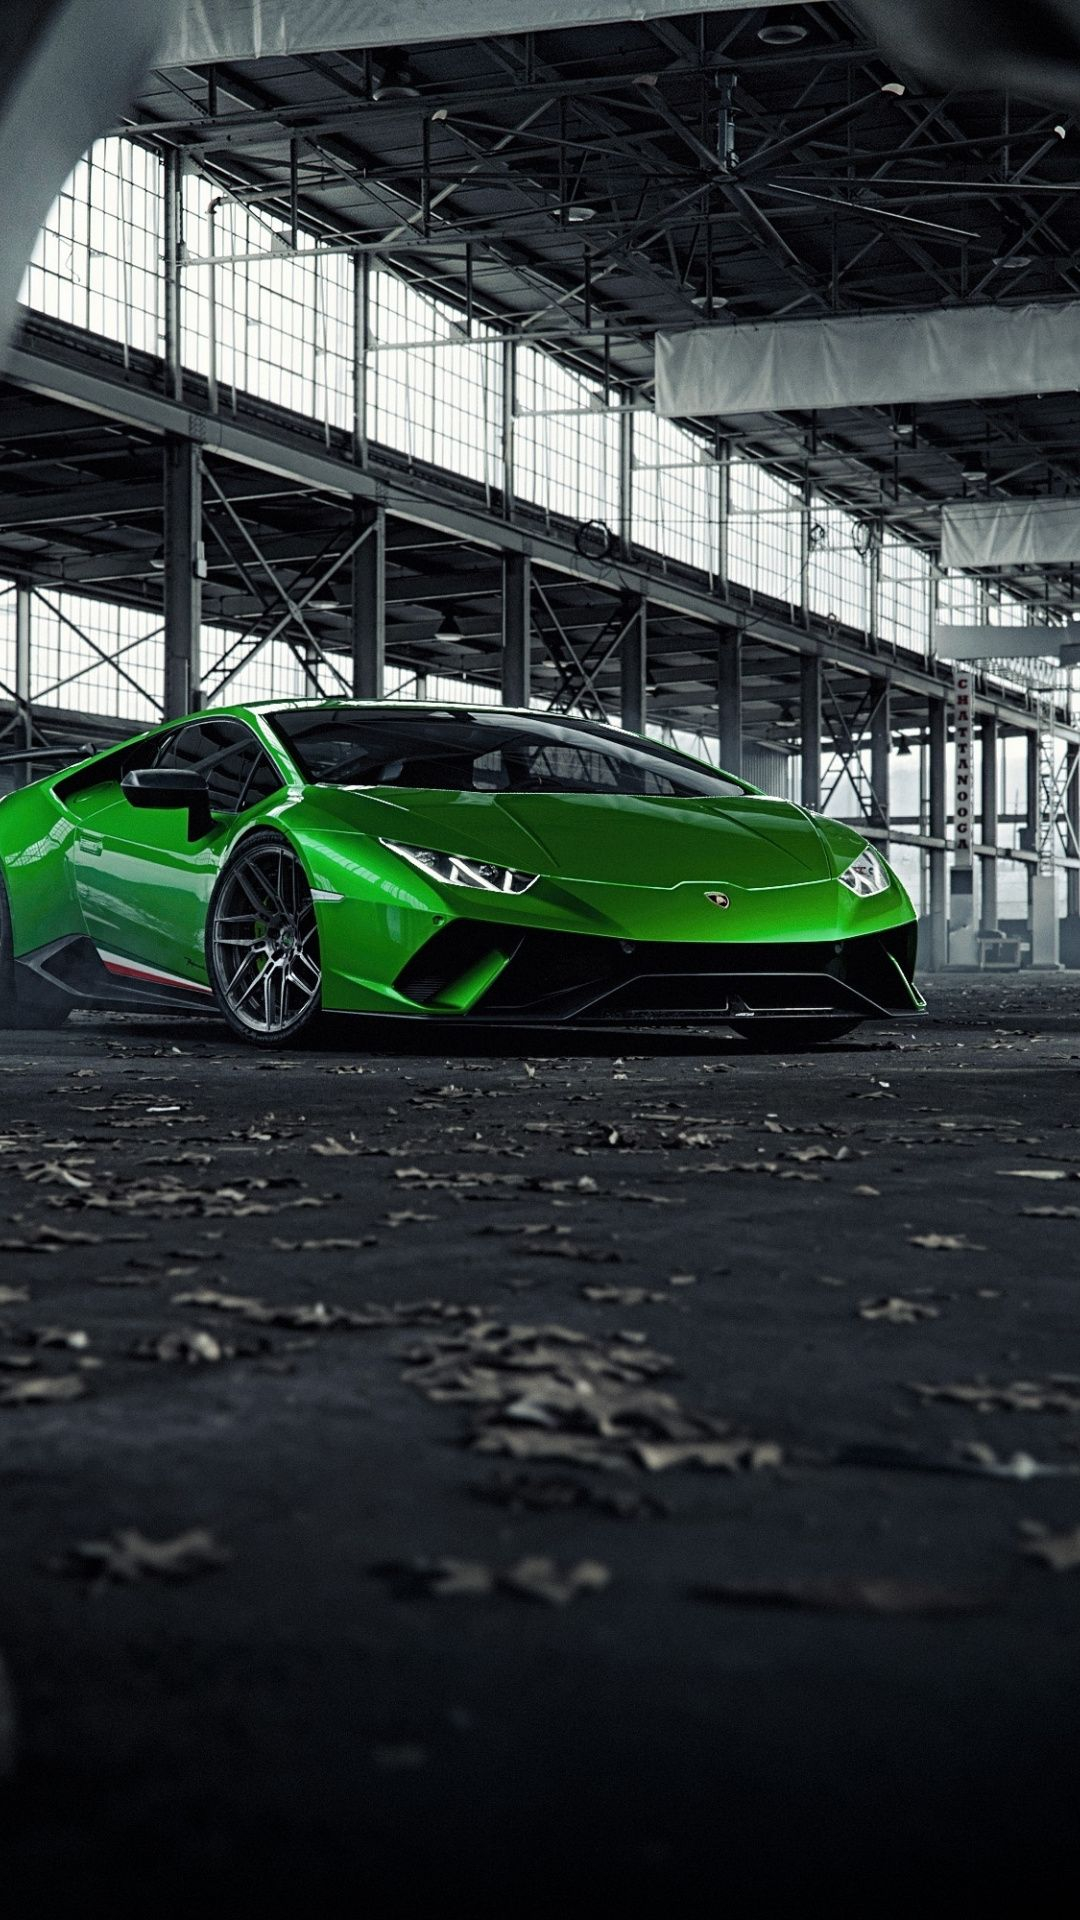 1080x1920 Green Lamborghini Huracan, sports car wallpaper | Green lamborghini, Car wallpapers, Sports car wallpaper